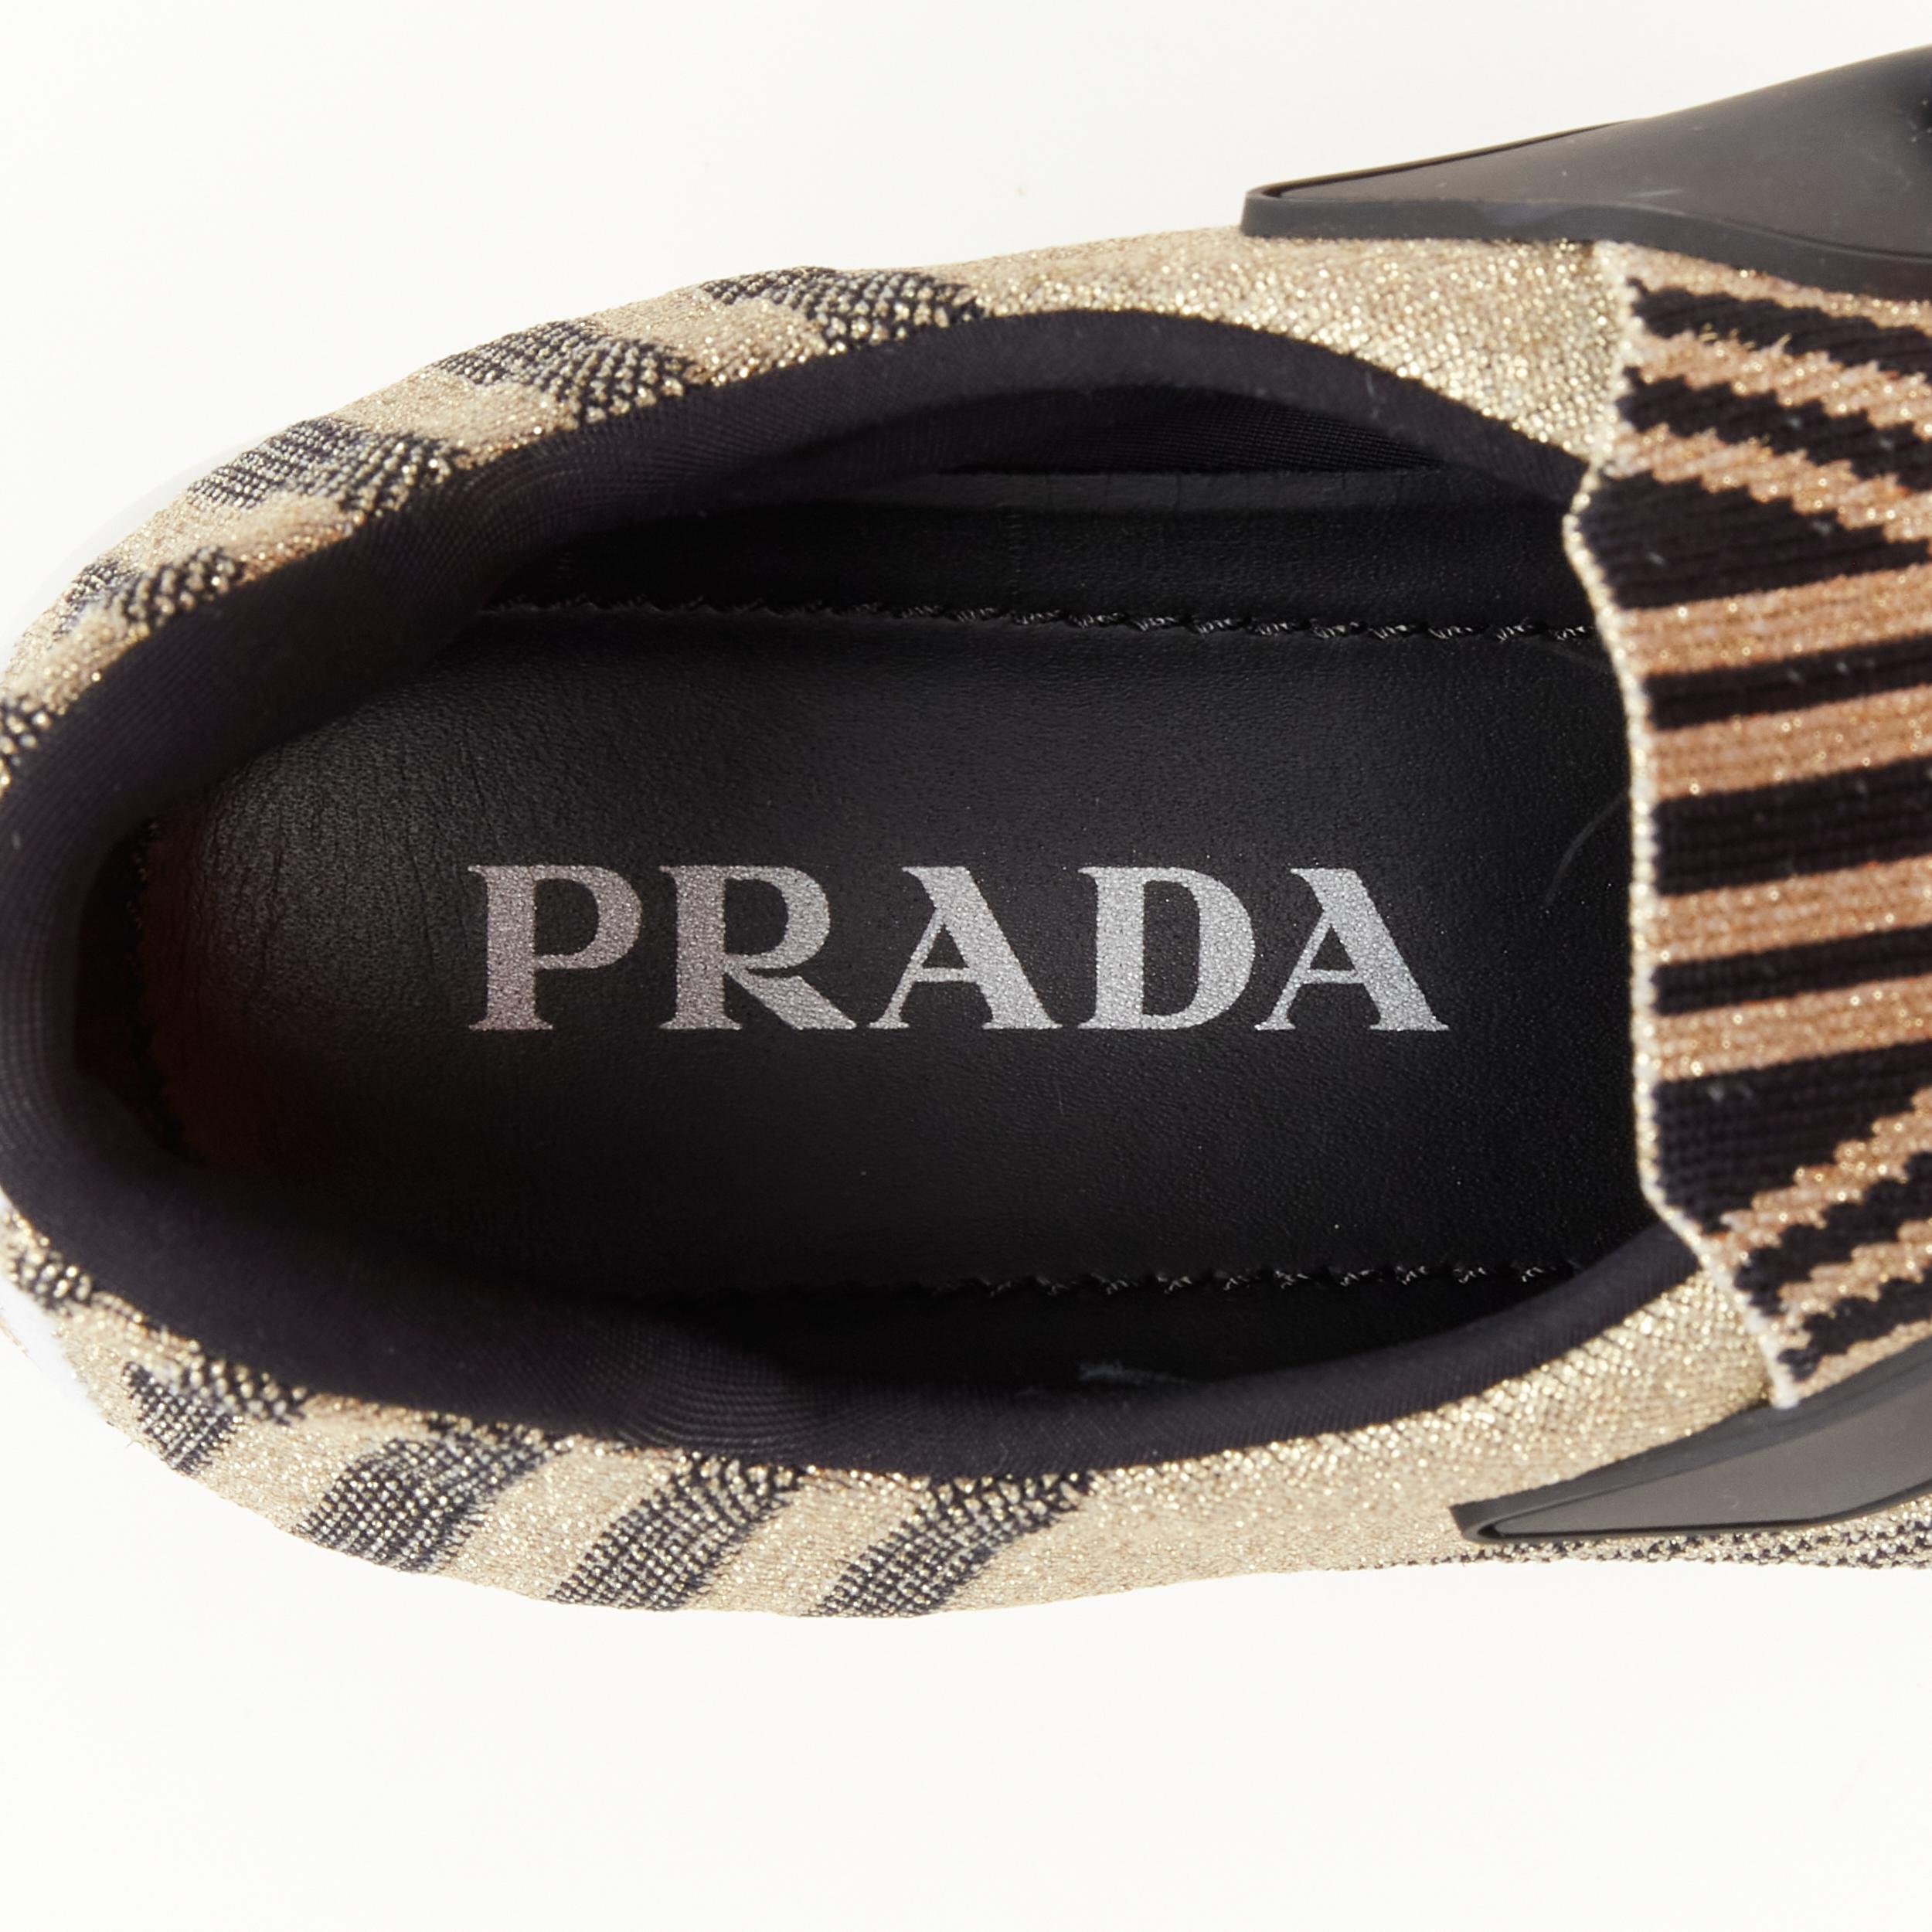 PRADA Cloudbust metallic gold sock knit logo rubber strap low top sneaker EU36 4